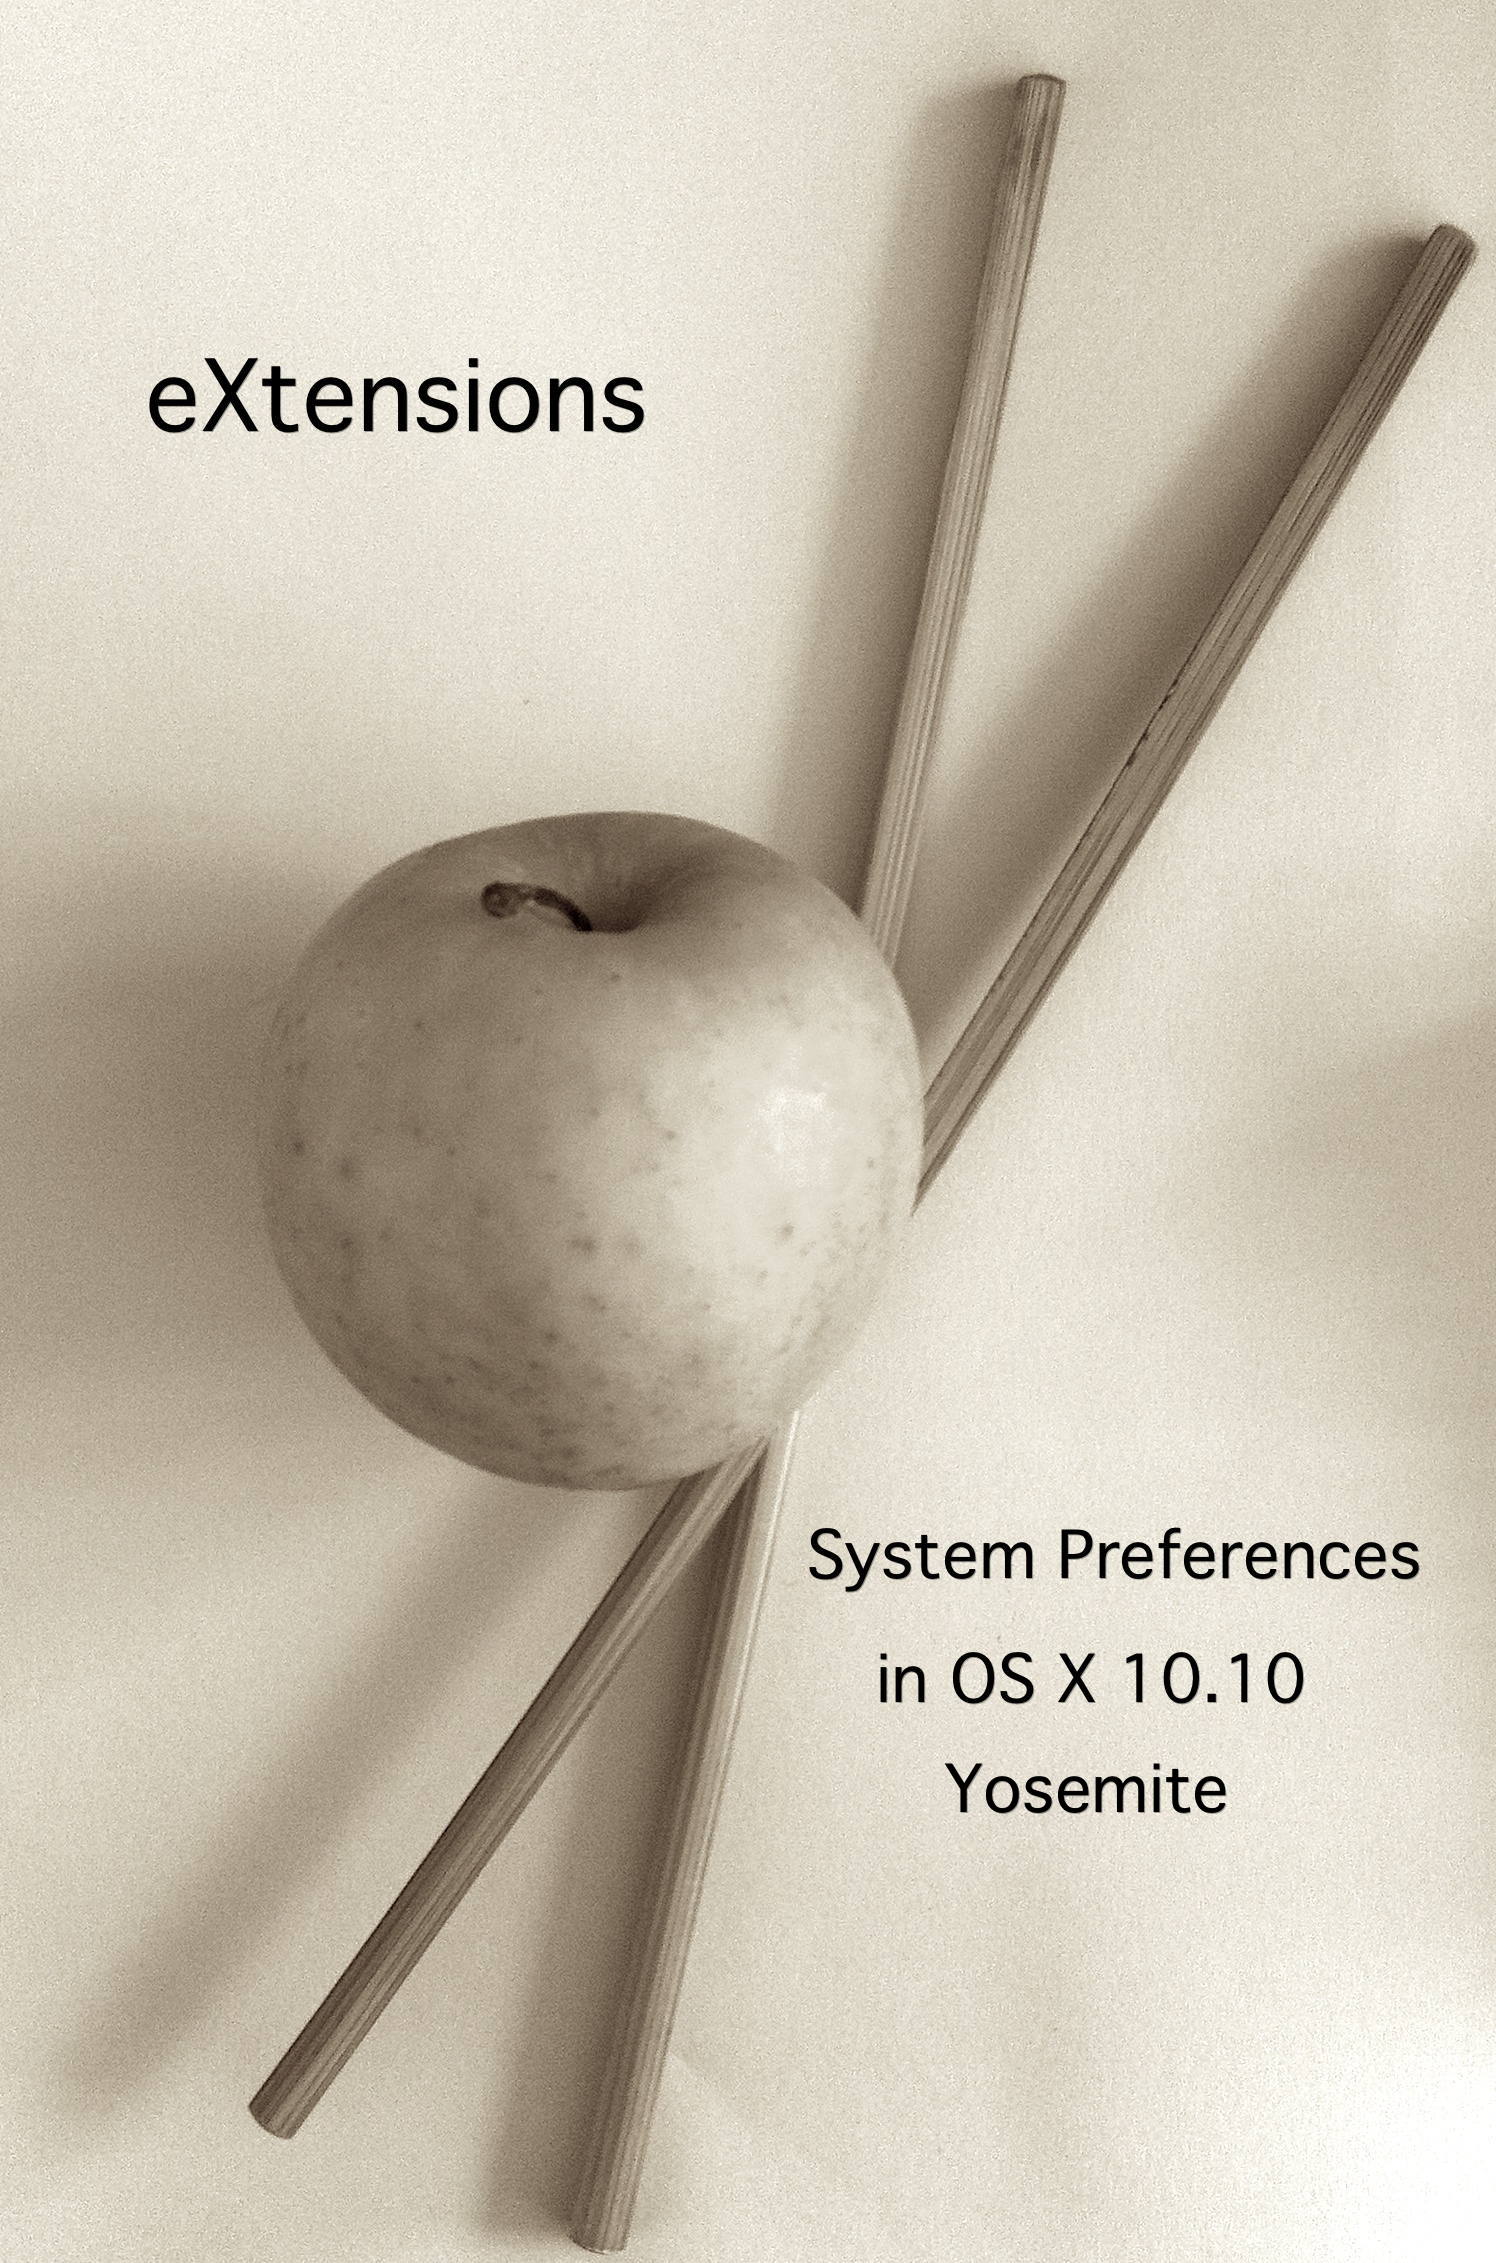 eXtensions - Yosemite Preferences